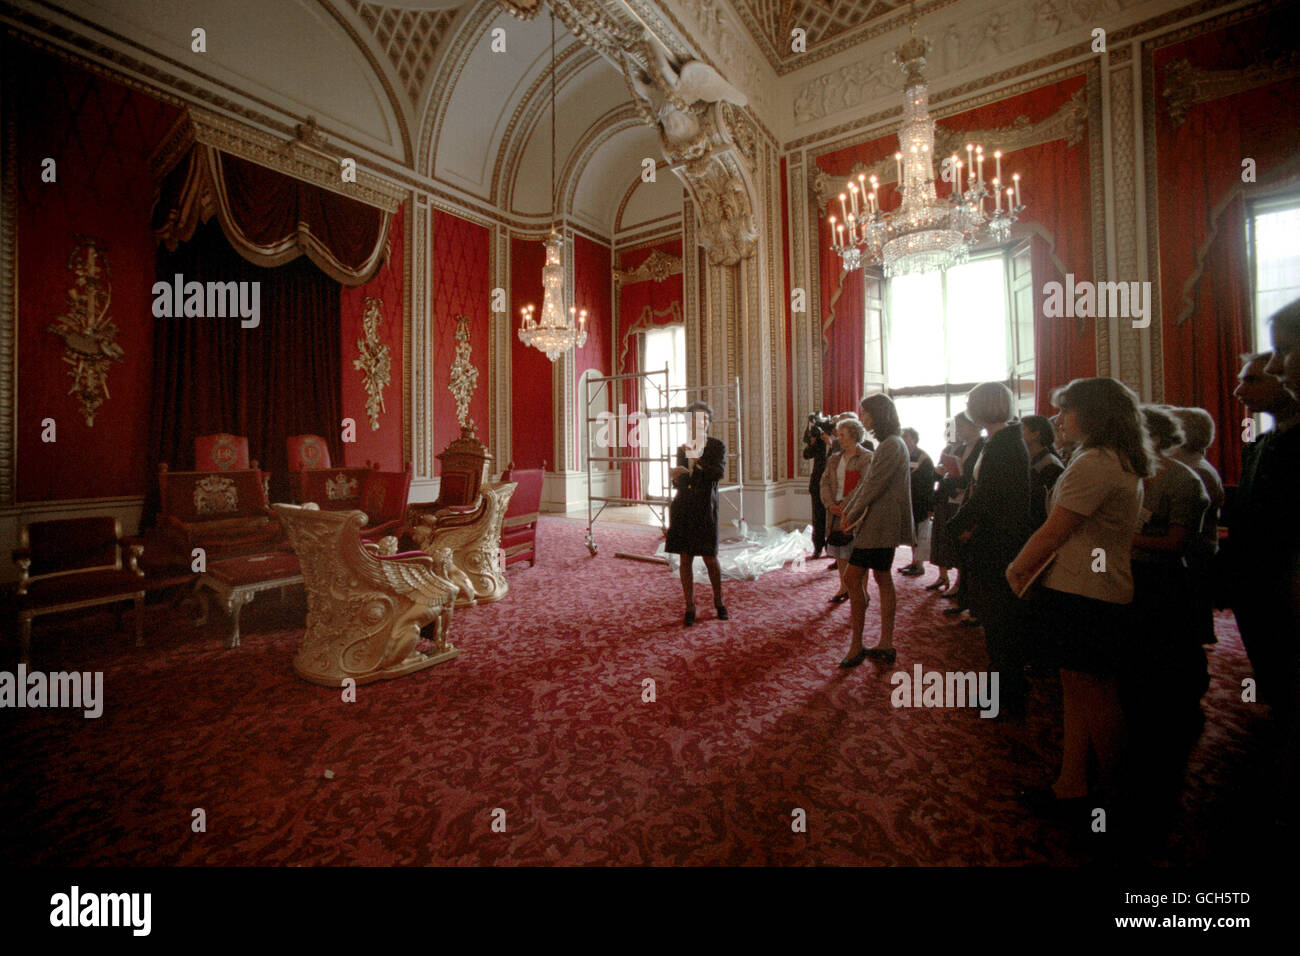 Throne Room At Buckingham Palace Stock Photos Throne Room